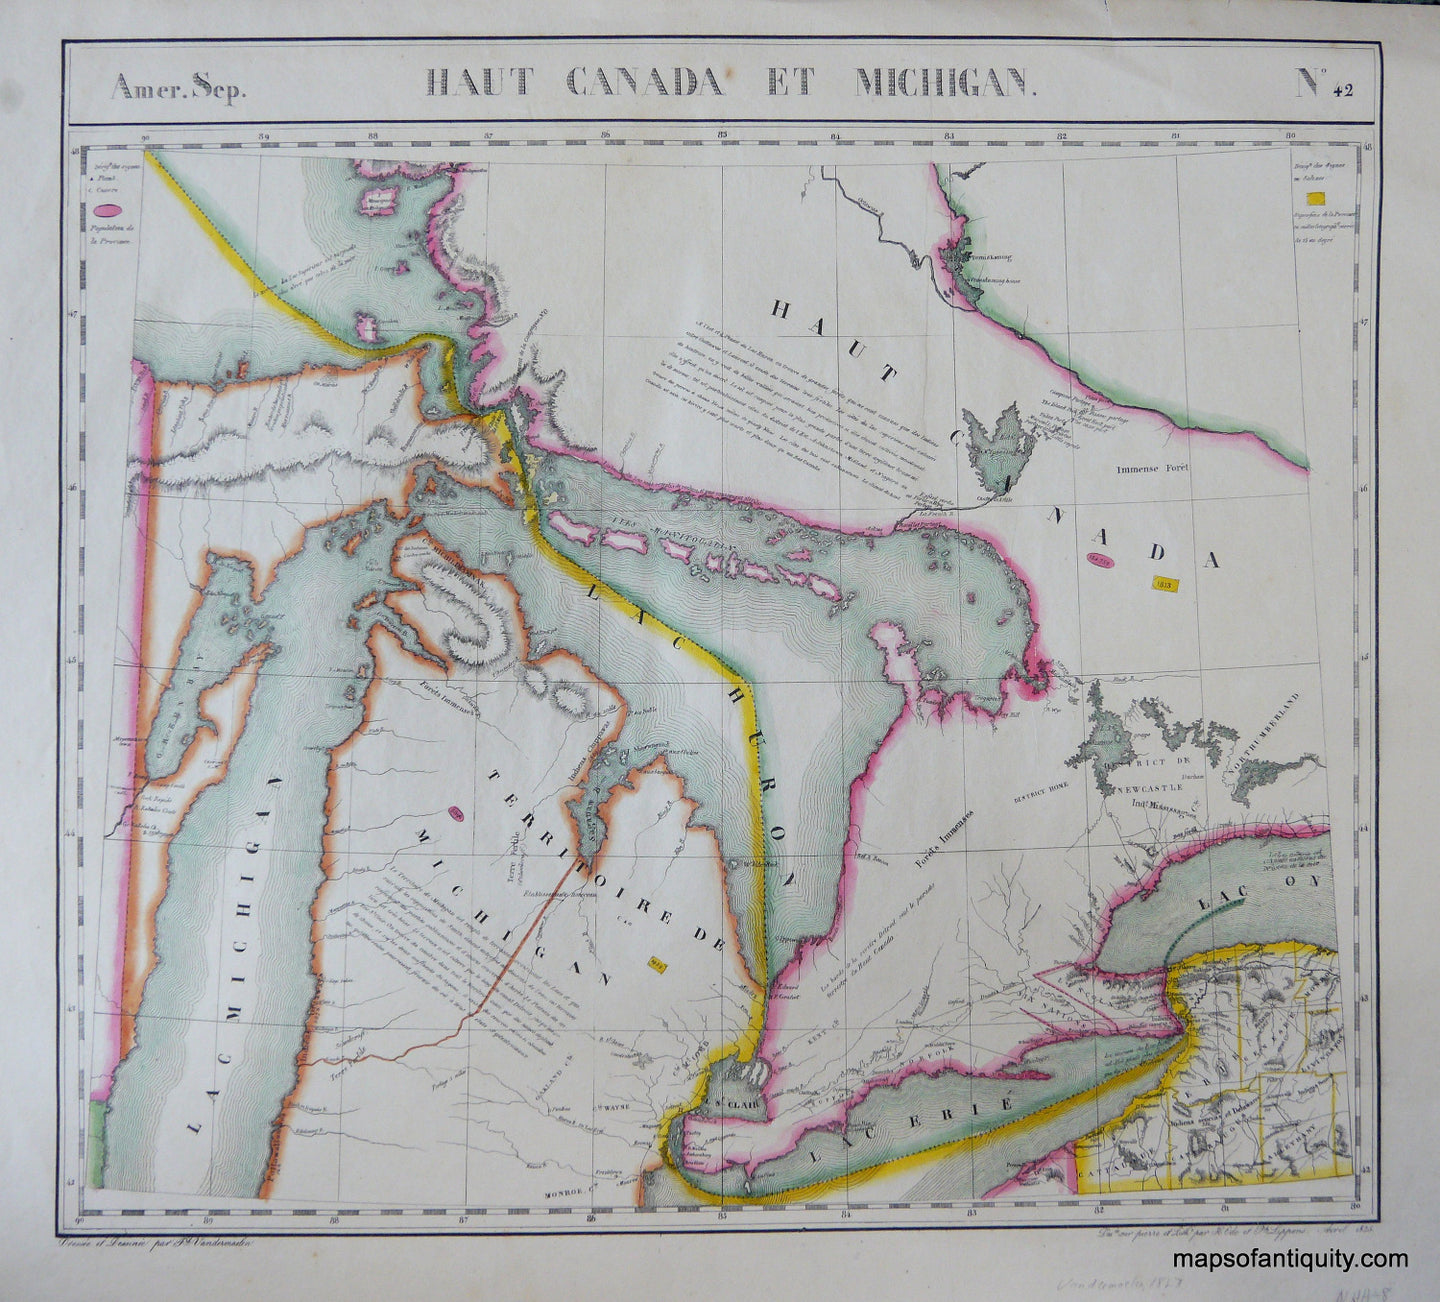 Antique-Hand-Colored-Map-Amer.-Sep.-No.-42-Haut-Canada-et-Michigan-****-North-America--1827-Vandermaelen-Maps-Of-Antiquity